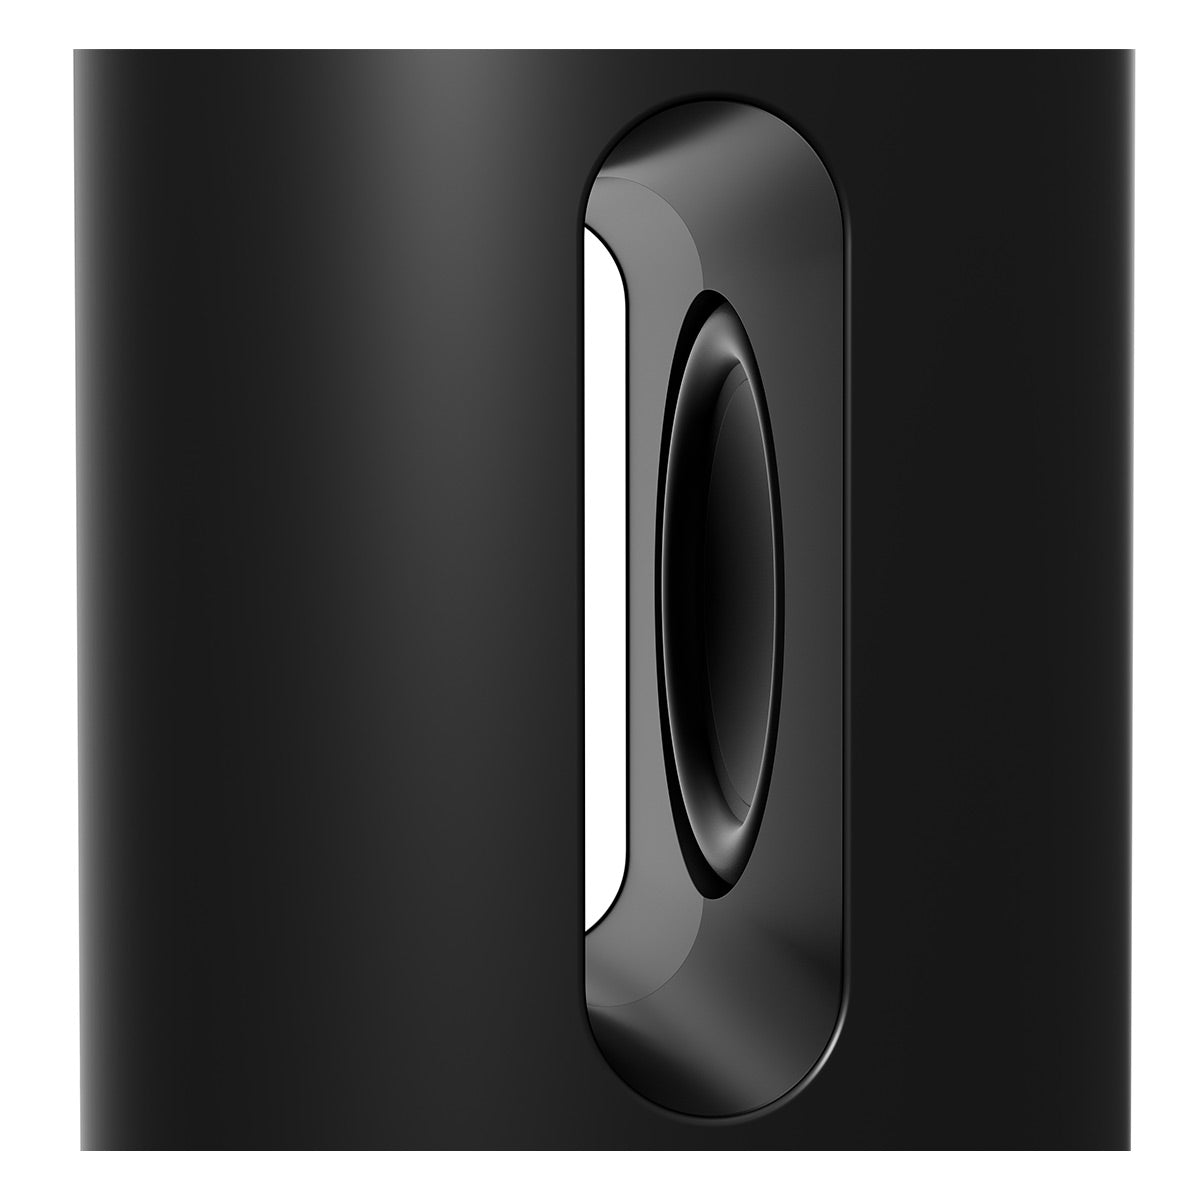 Sonos Entertainment Set with Ray Compact Soundbar (Black) and Sub Mini Wireless Subwoofer (Black)